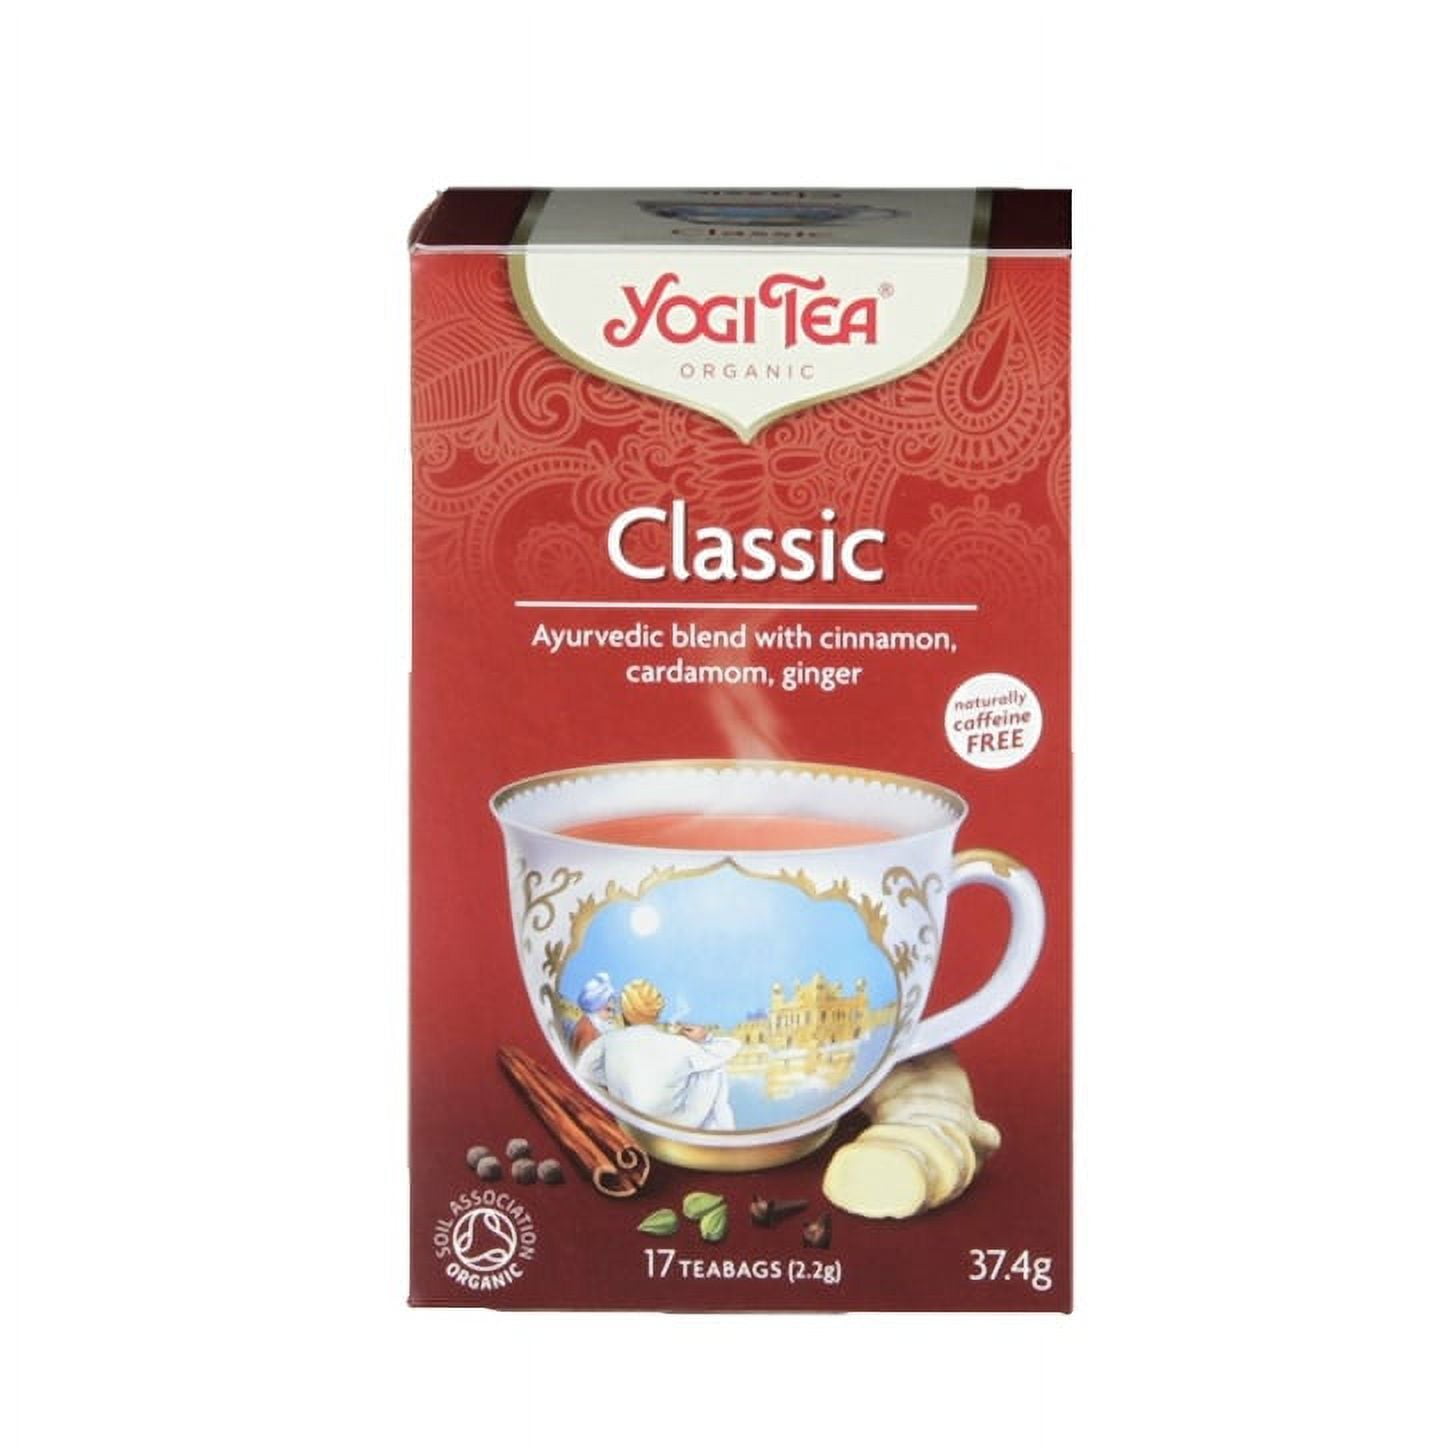 Yogi Tea Classic Organic Tea Bags - Pack of 2 - Free Shipping - NO MINIMUM  ORDER - British Version NOT American Variety - Imported by Sentogo